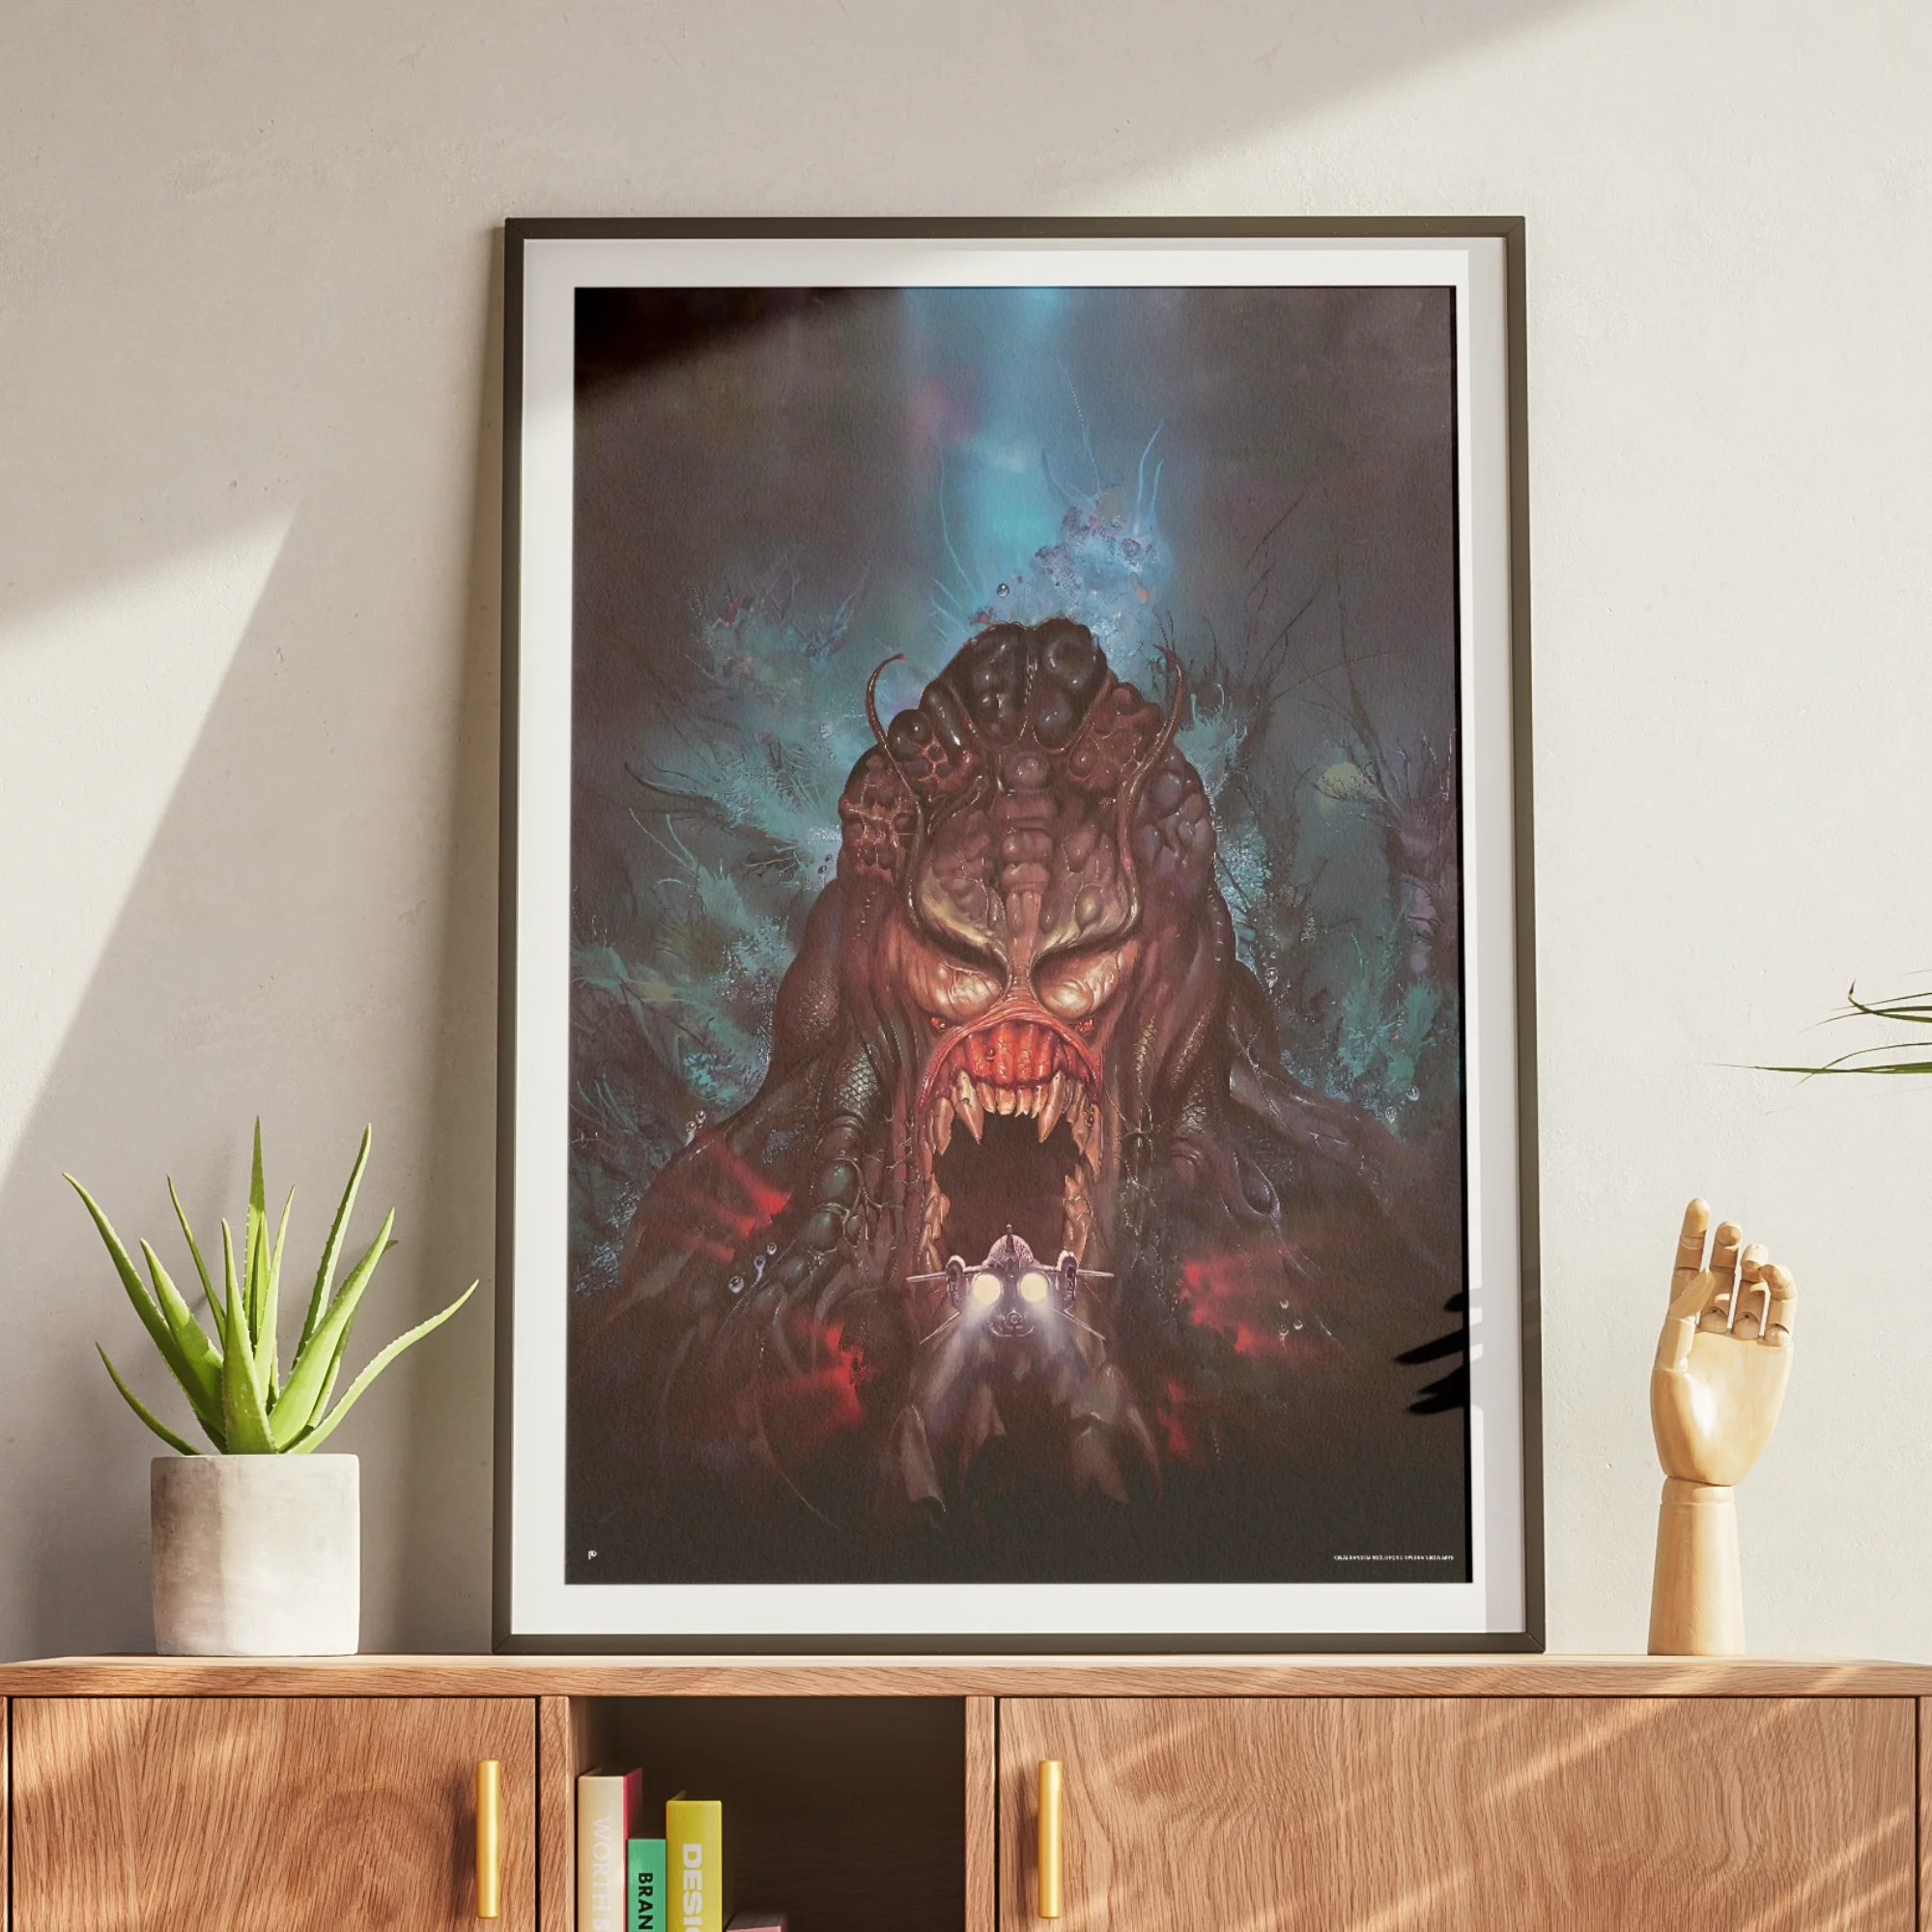 Framed artwork of fantastical monster in moody, surreal setting.